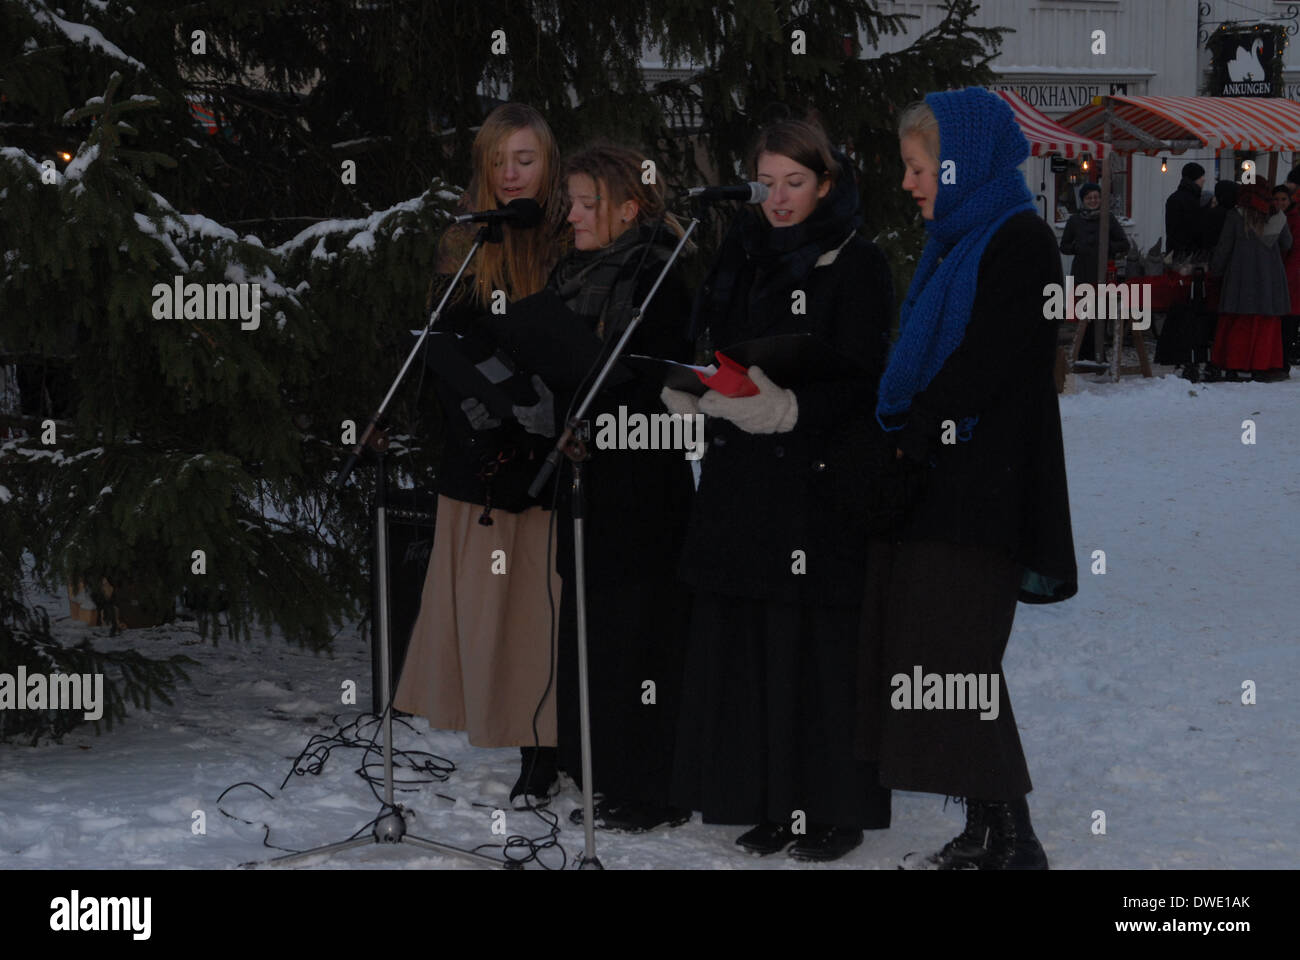 Carolers singing at a Christmas market. Stock Photo